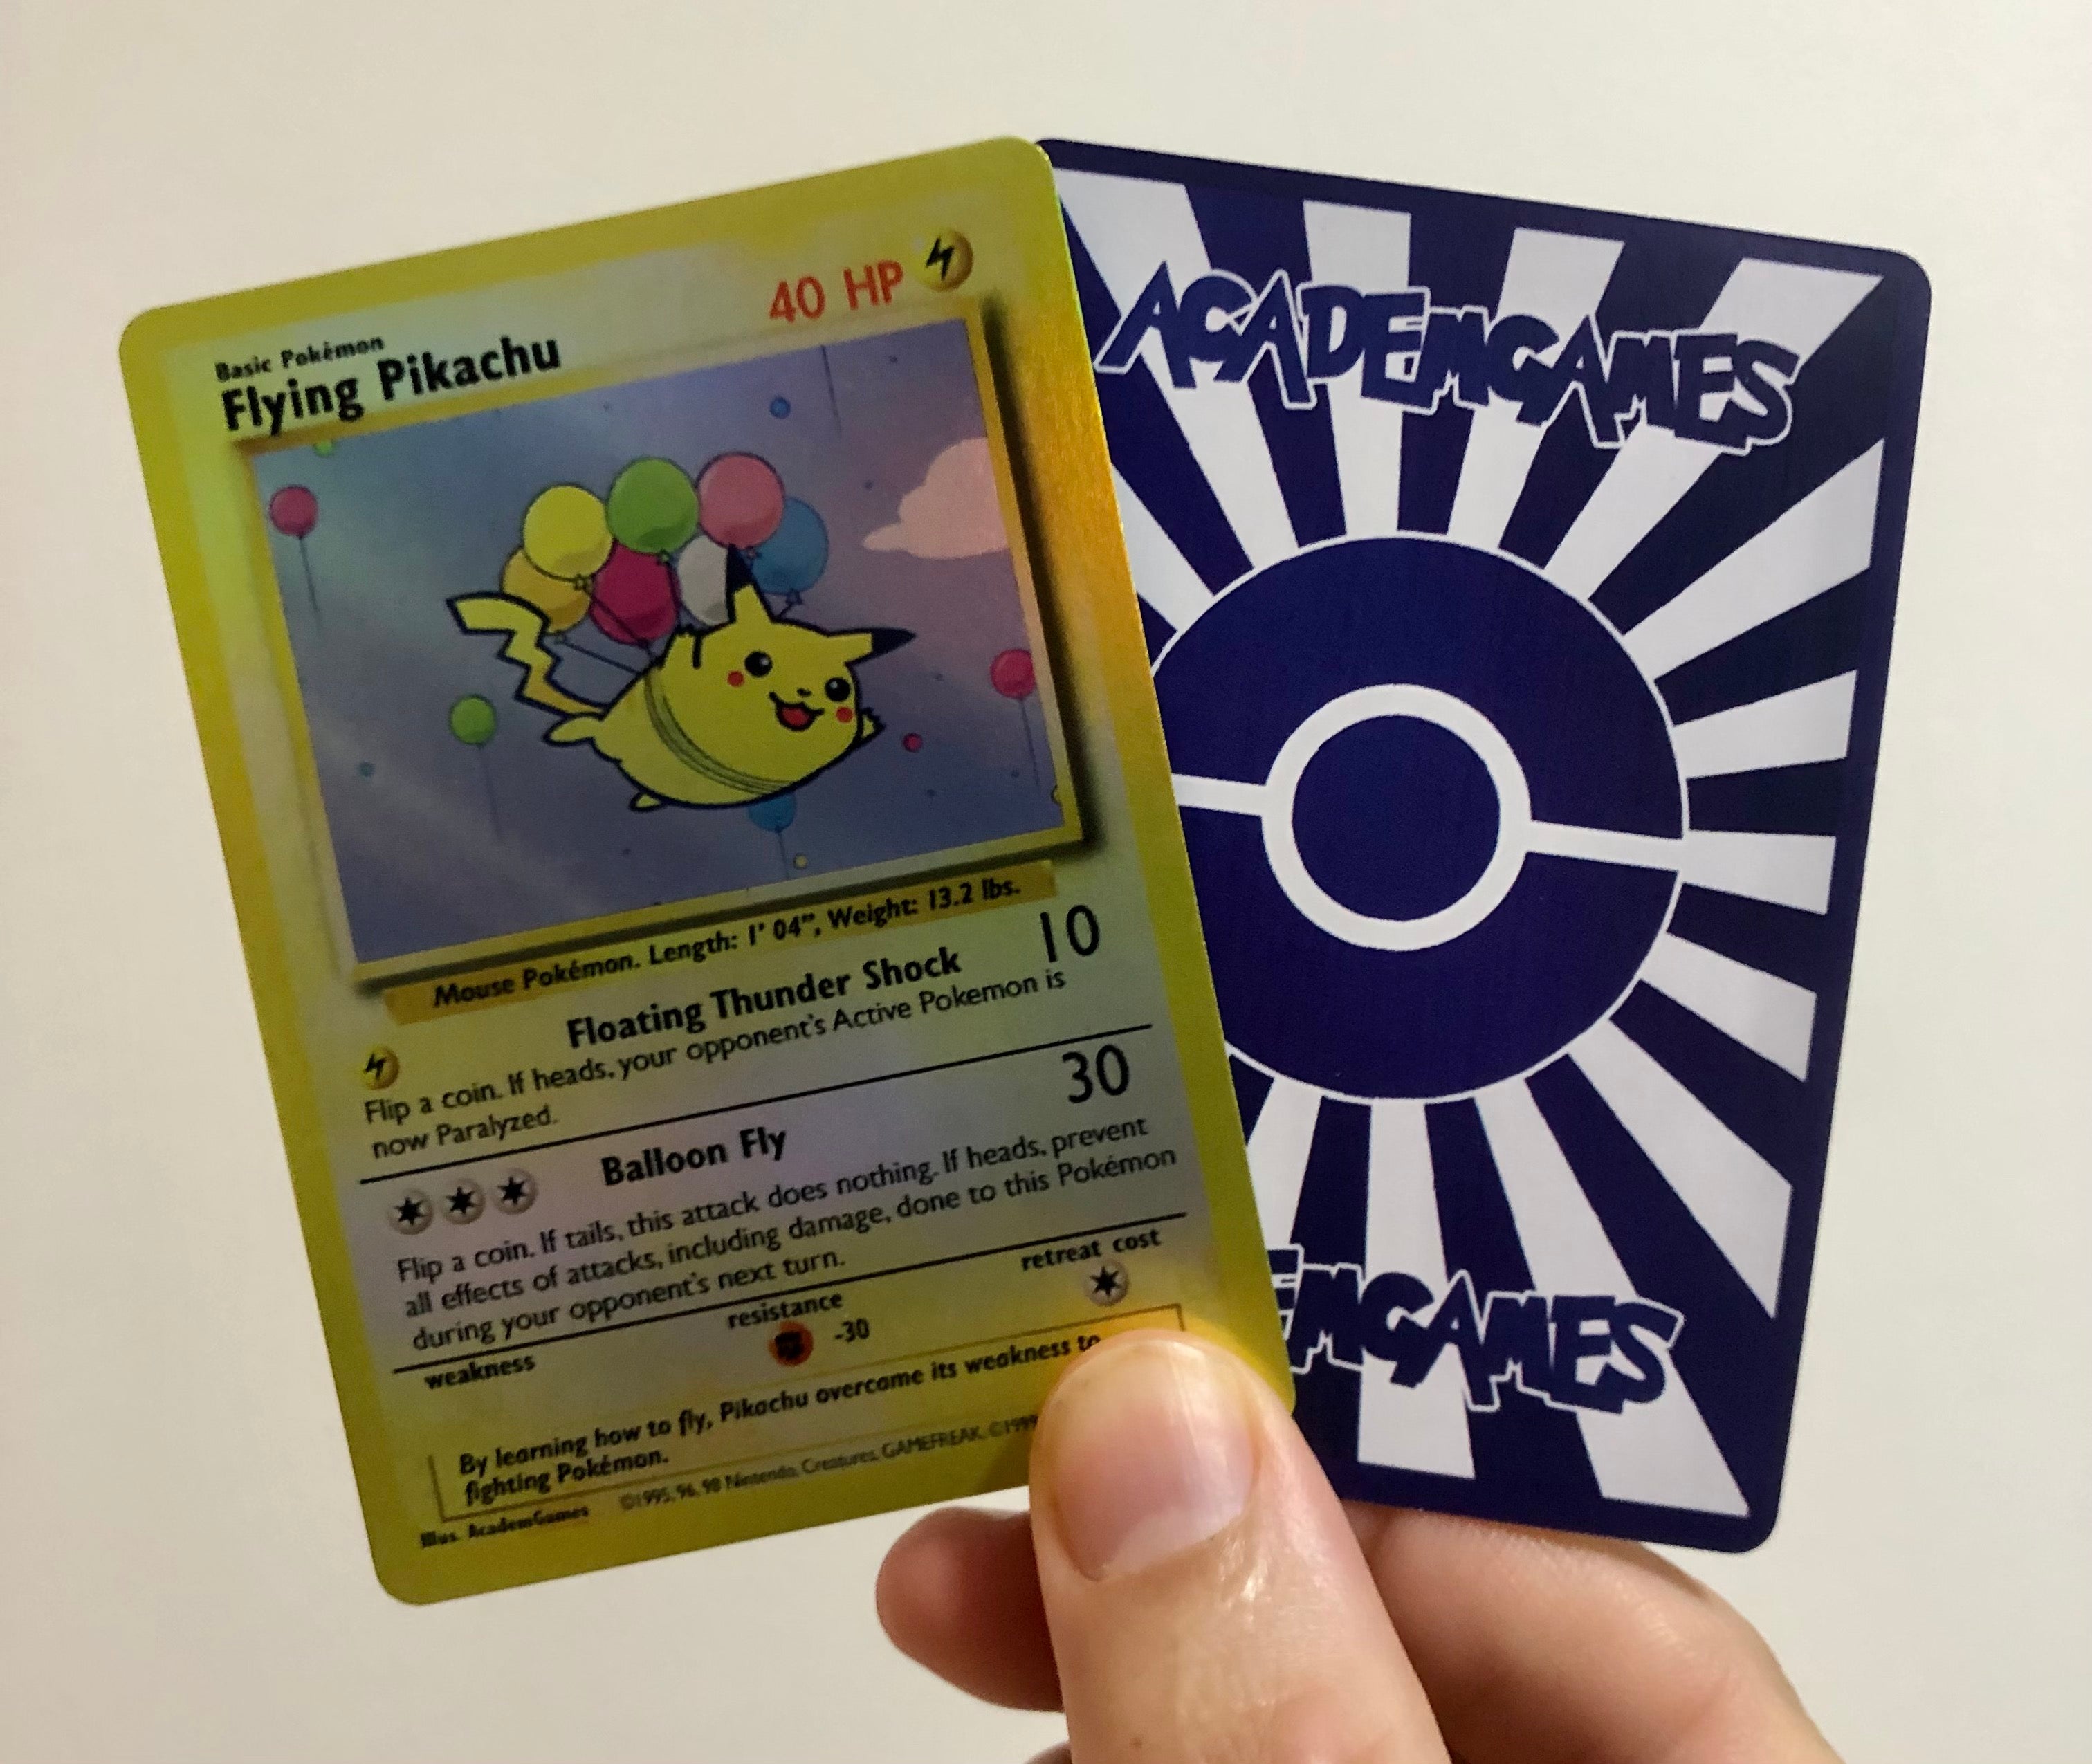 Credit Card SMART Sticker Skin Flying Pikachu Pokémon Card Decal